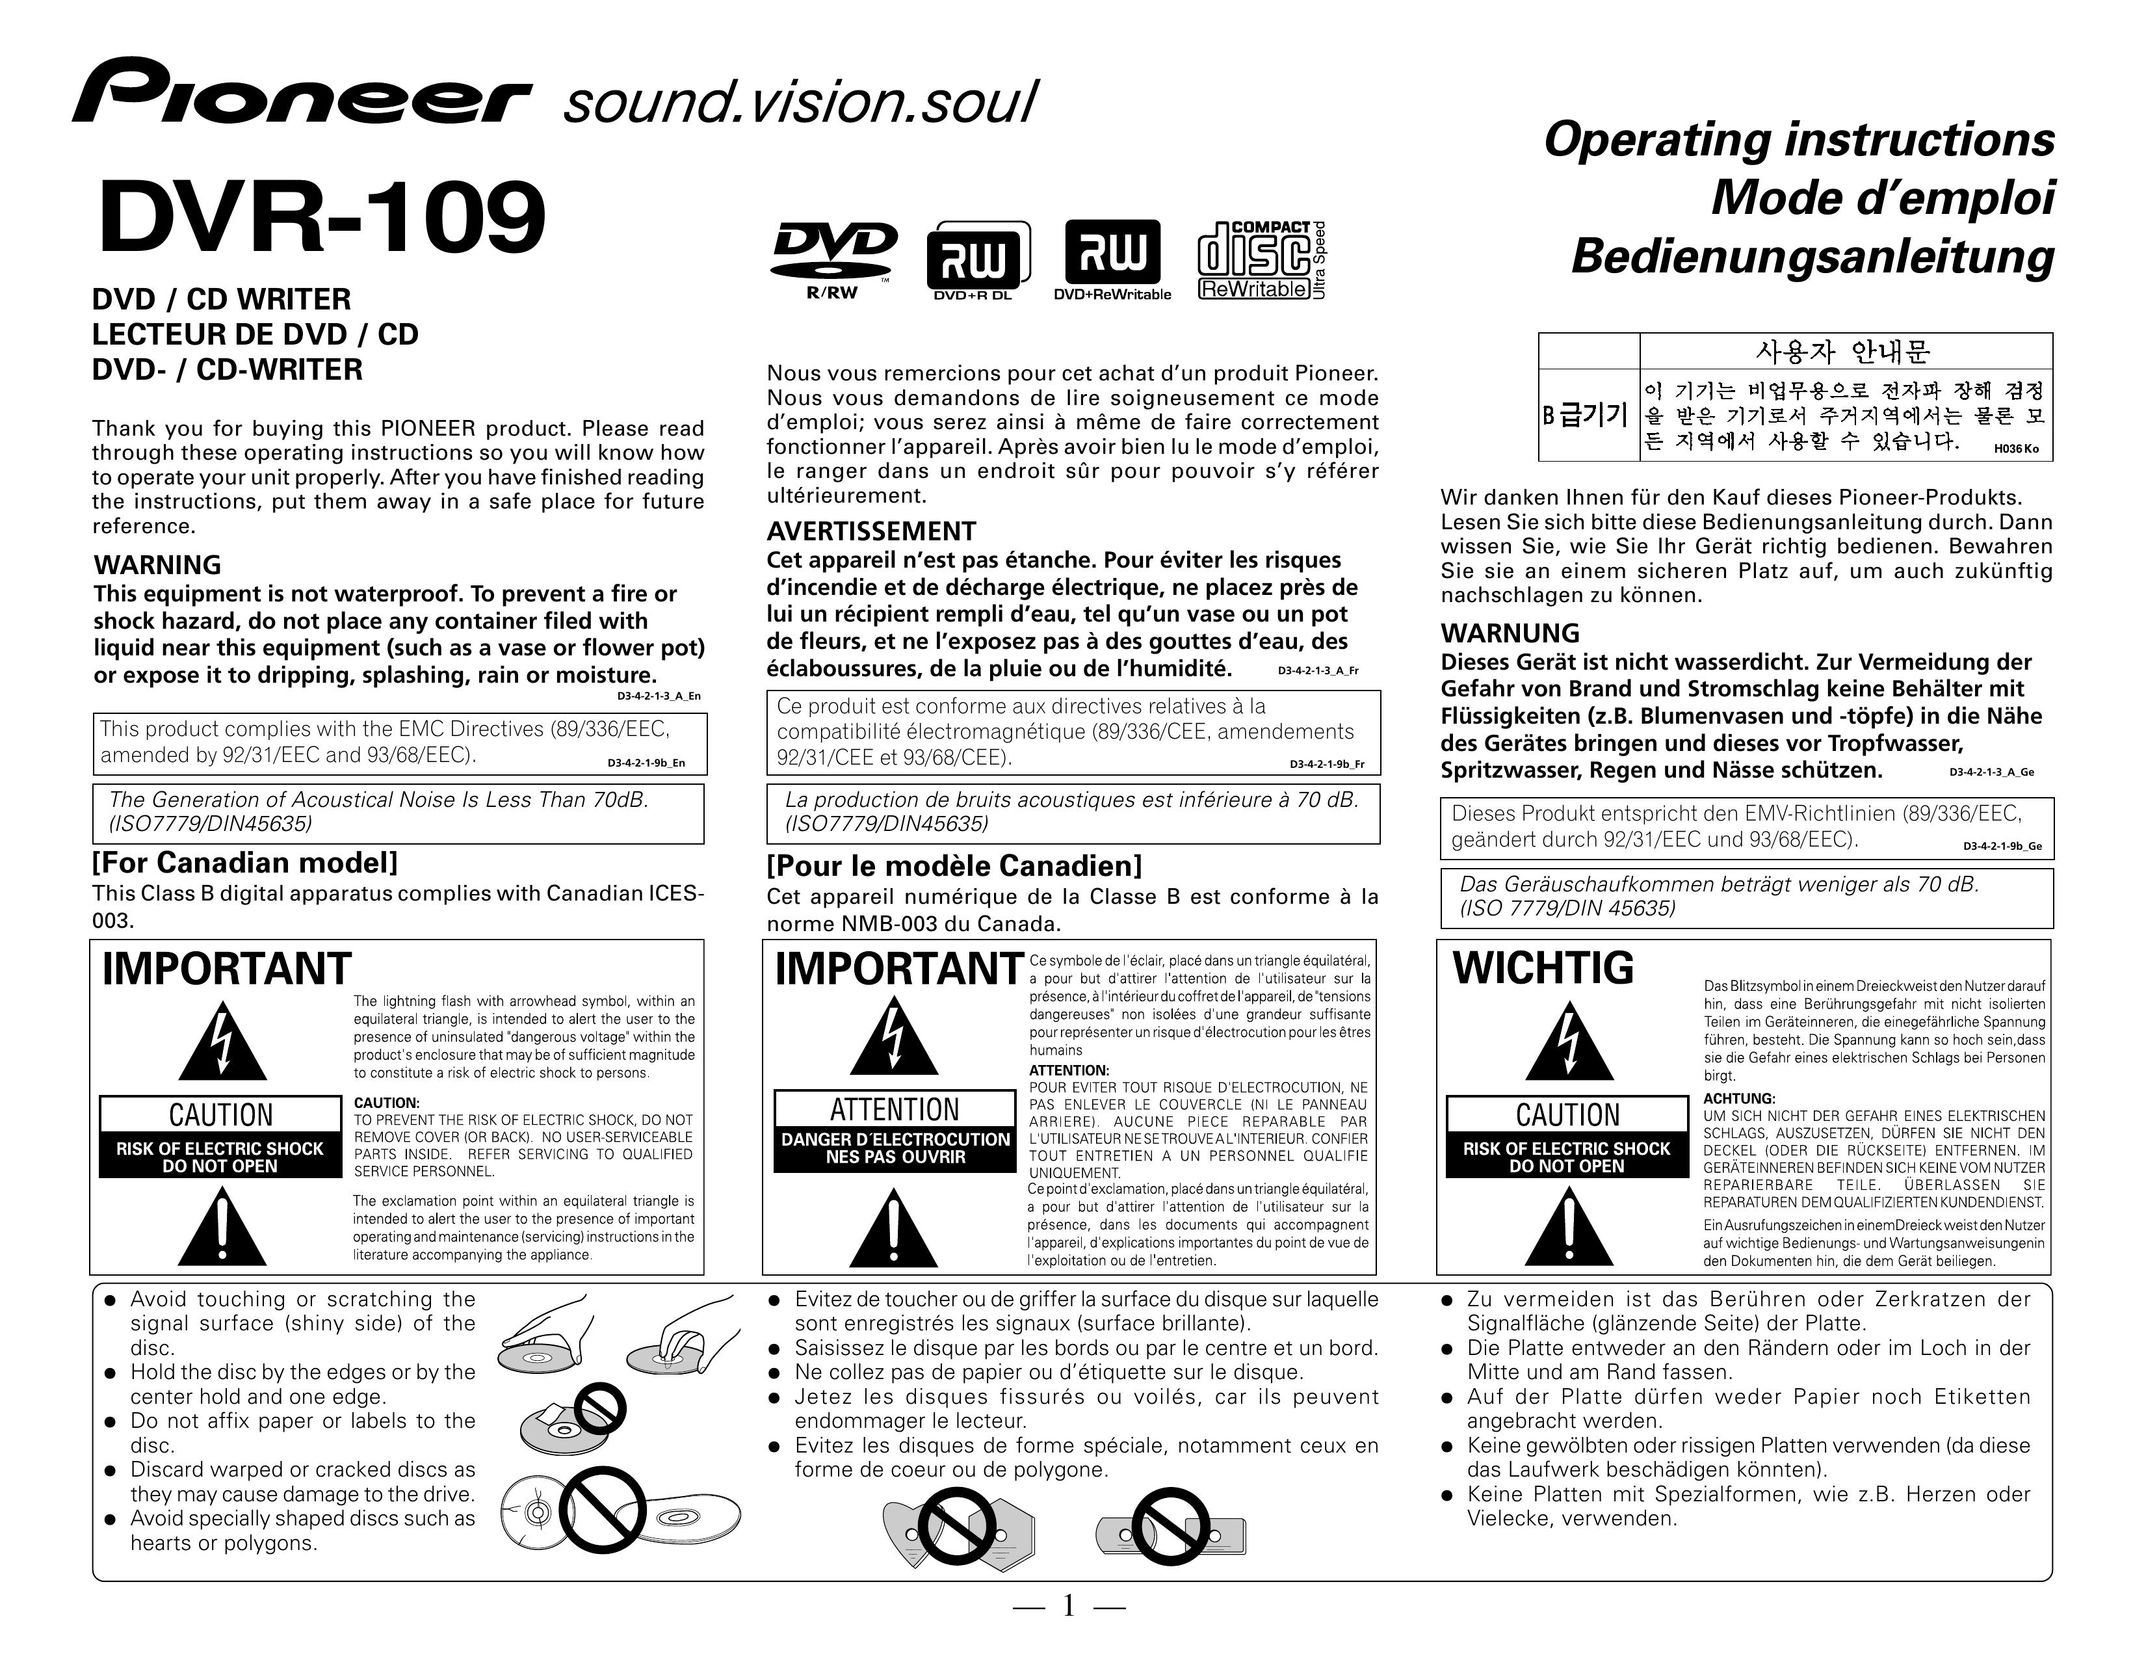 Pioneer DVR-109 DVD Recorder User Manual